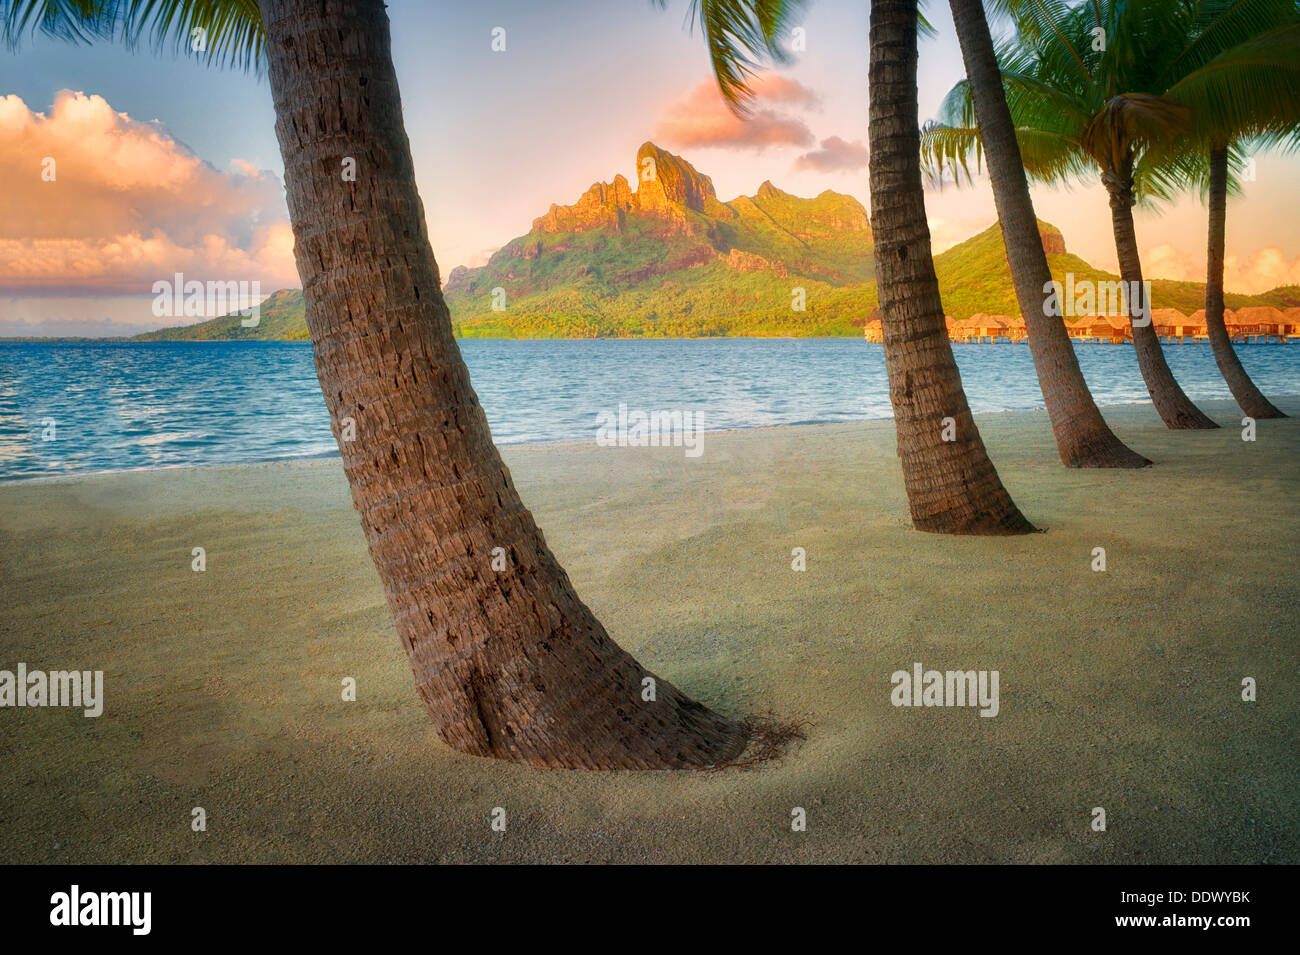 Sandy beach with palm trees and Mt. Otemanu. Bora Bora. French Polynesia. Stock Photo